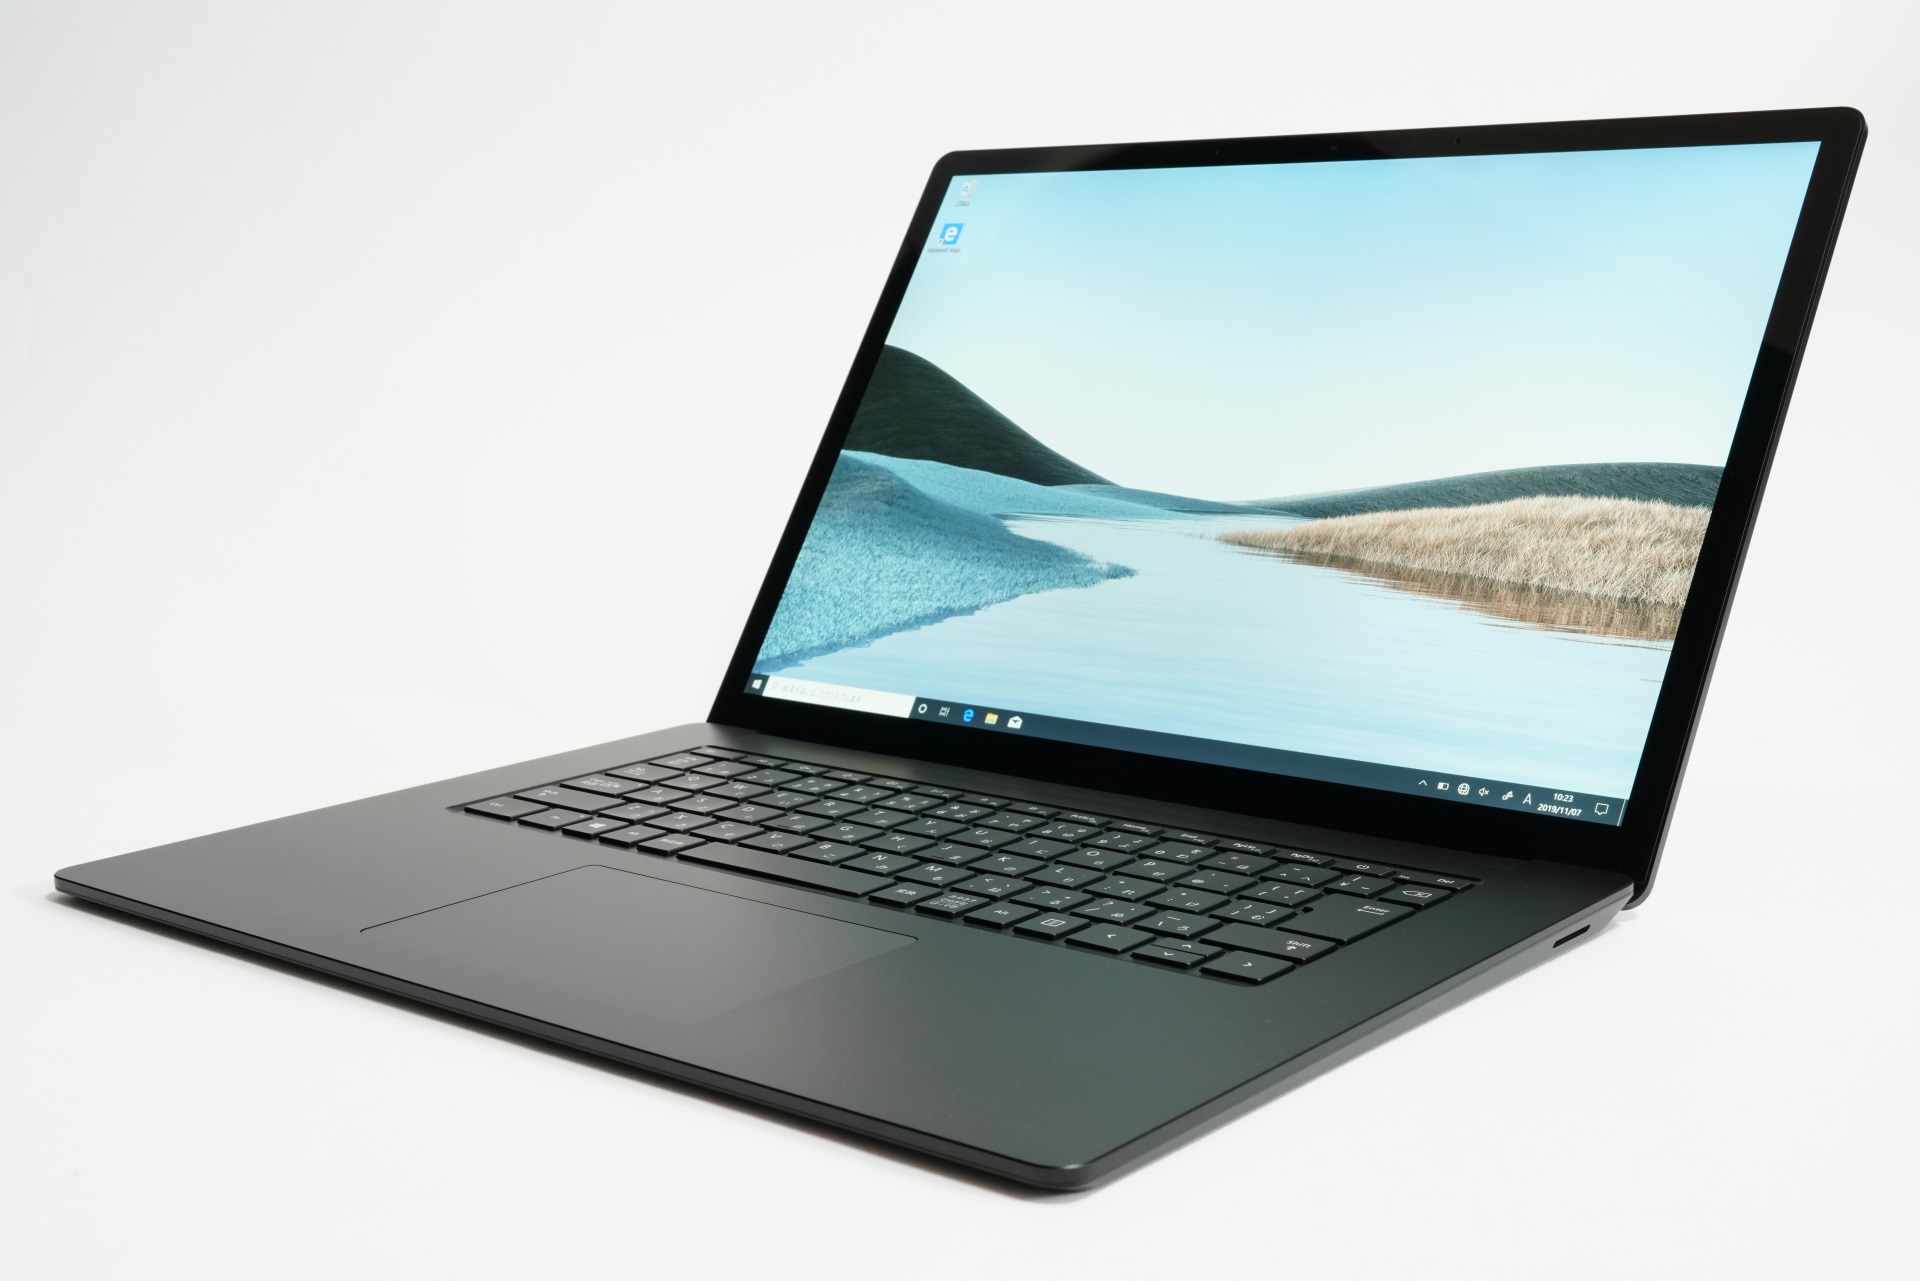 Hothotレビュー】Ryzen搭載でGPU性能が格段に向上した「Surface Laptop